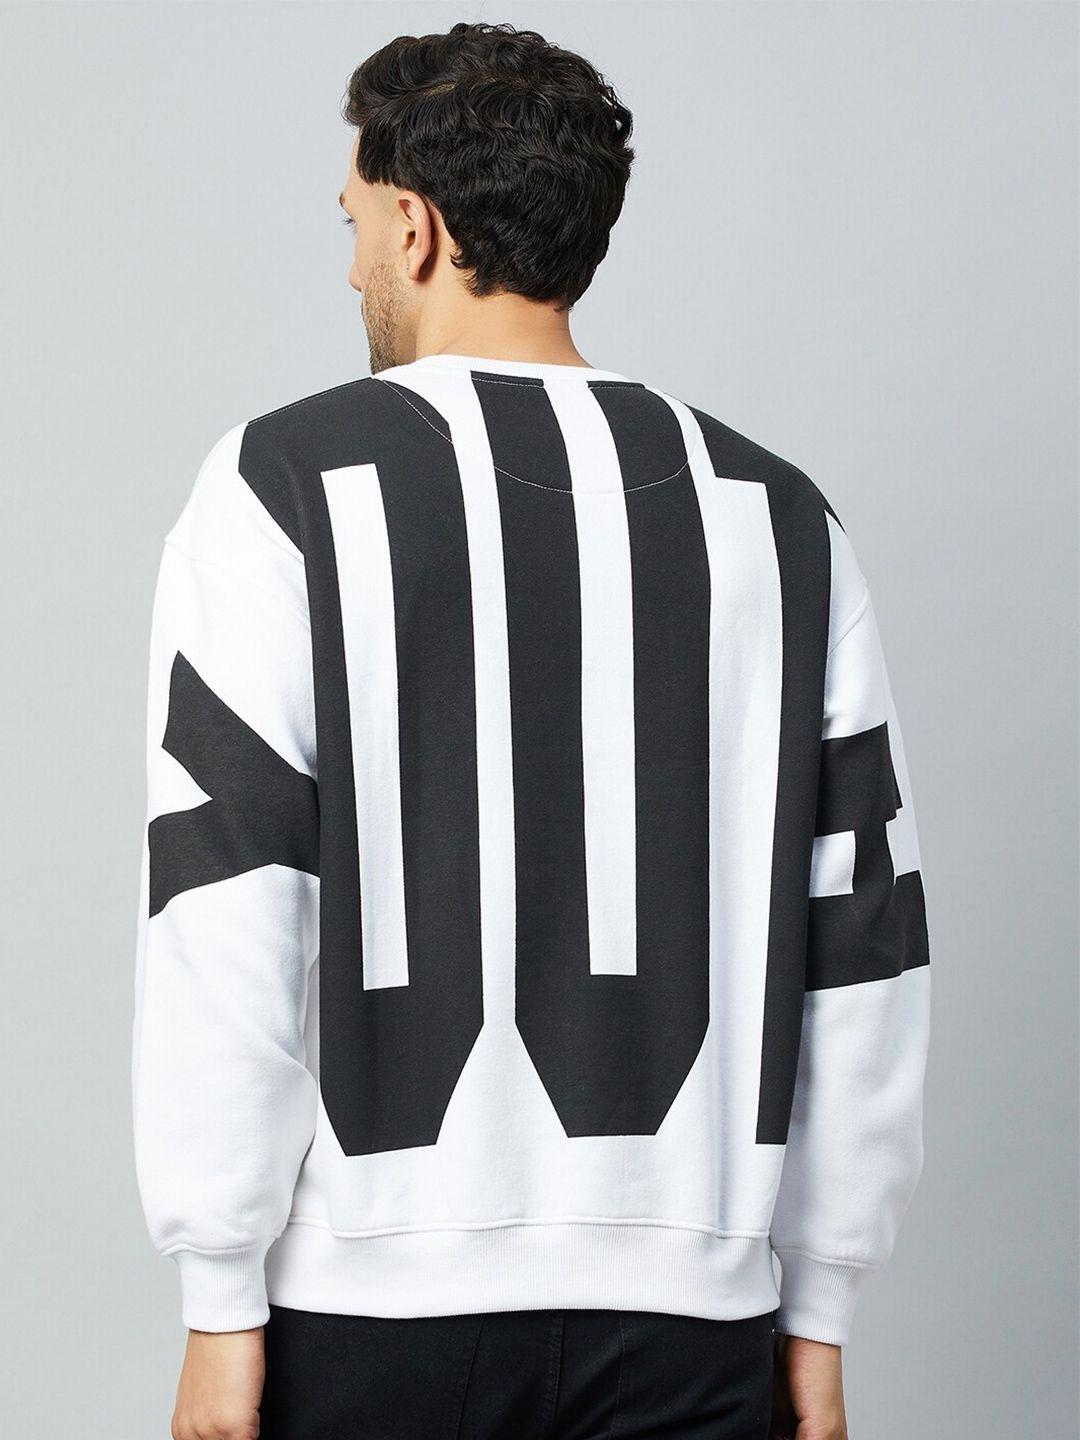 club-york-typography-printed-fleece-pullover-sweatshirt